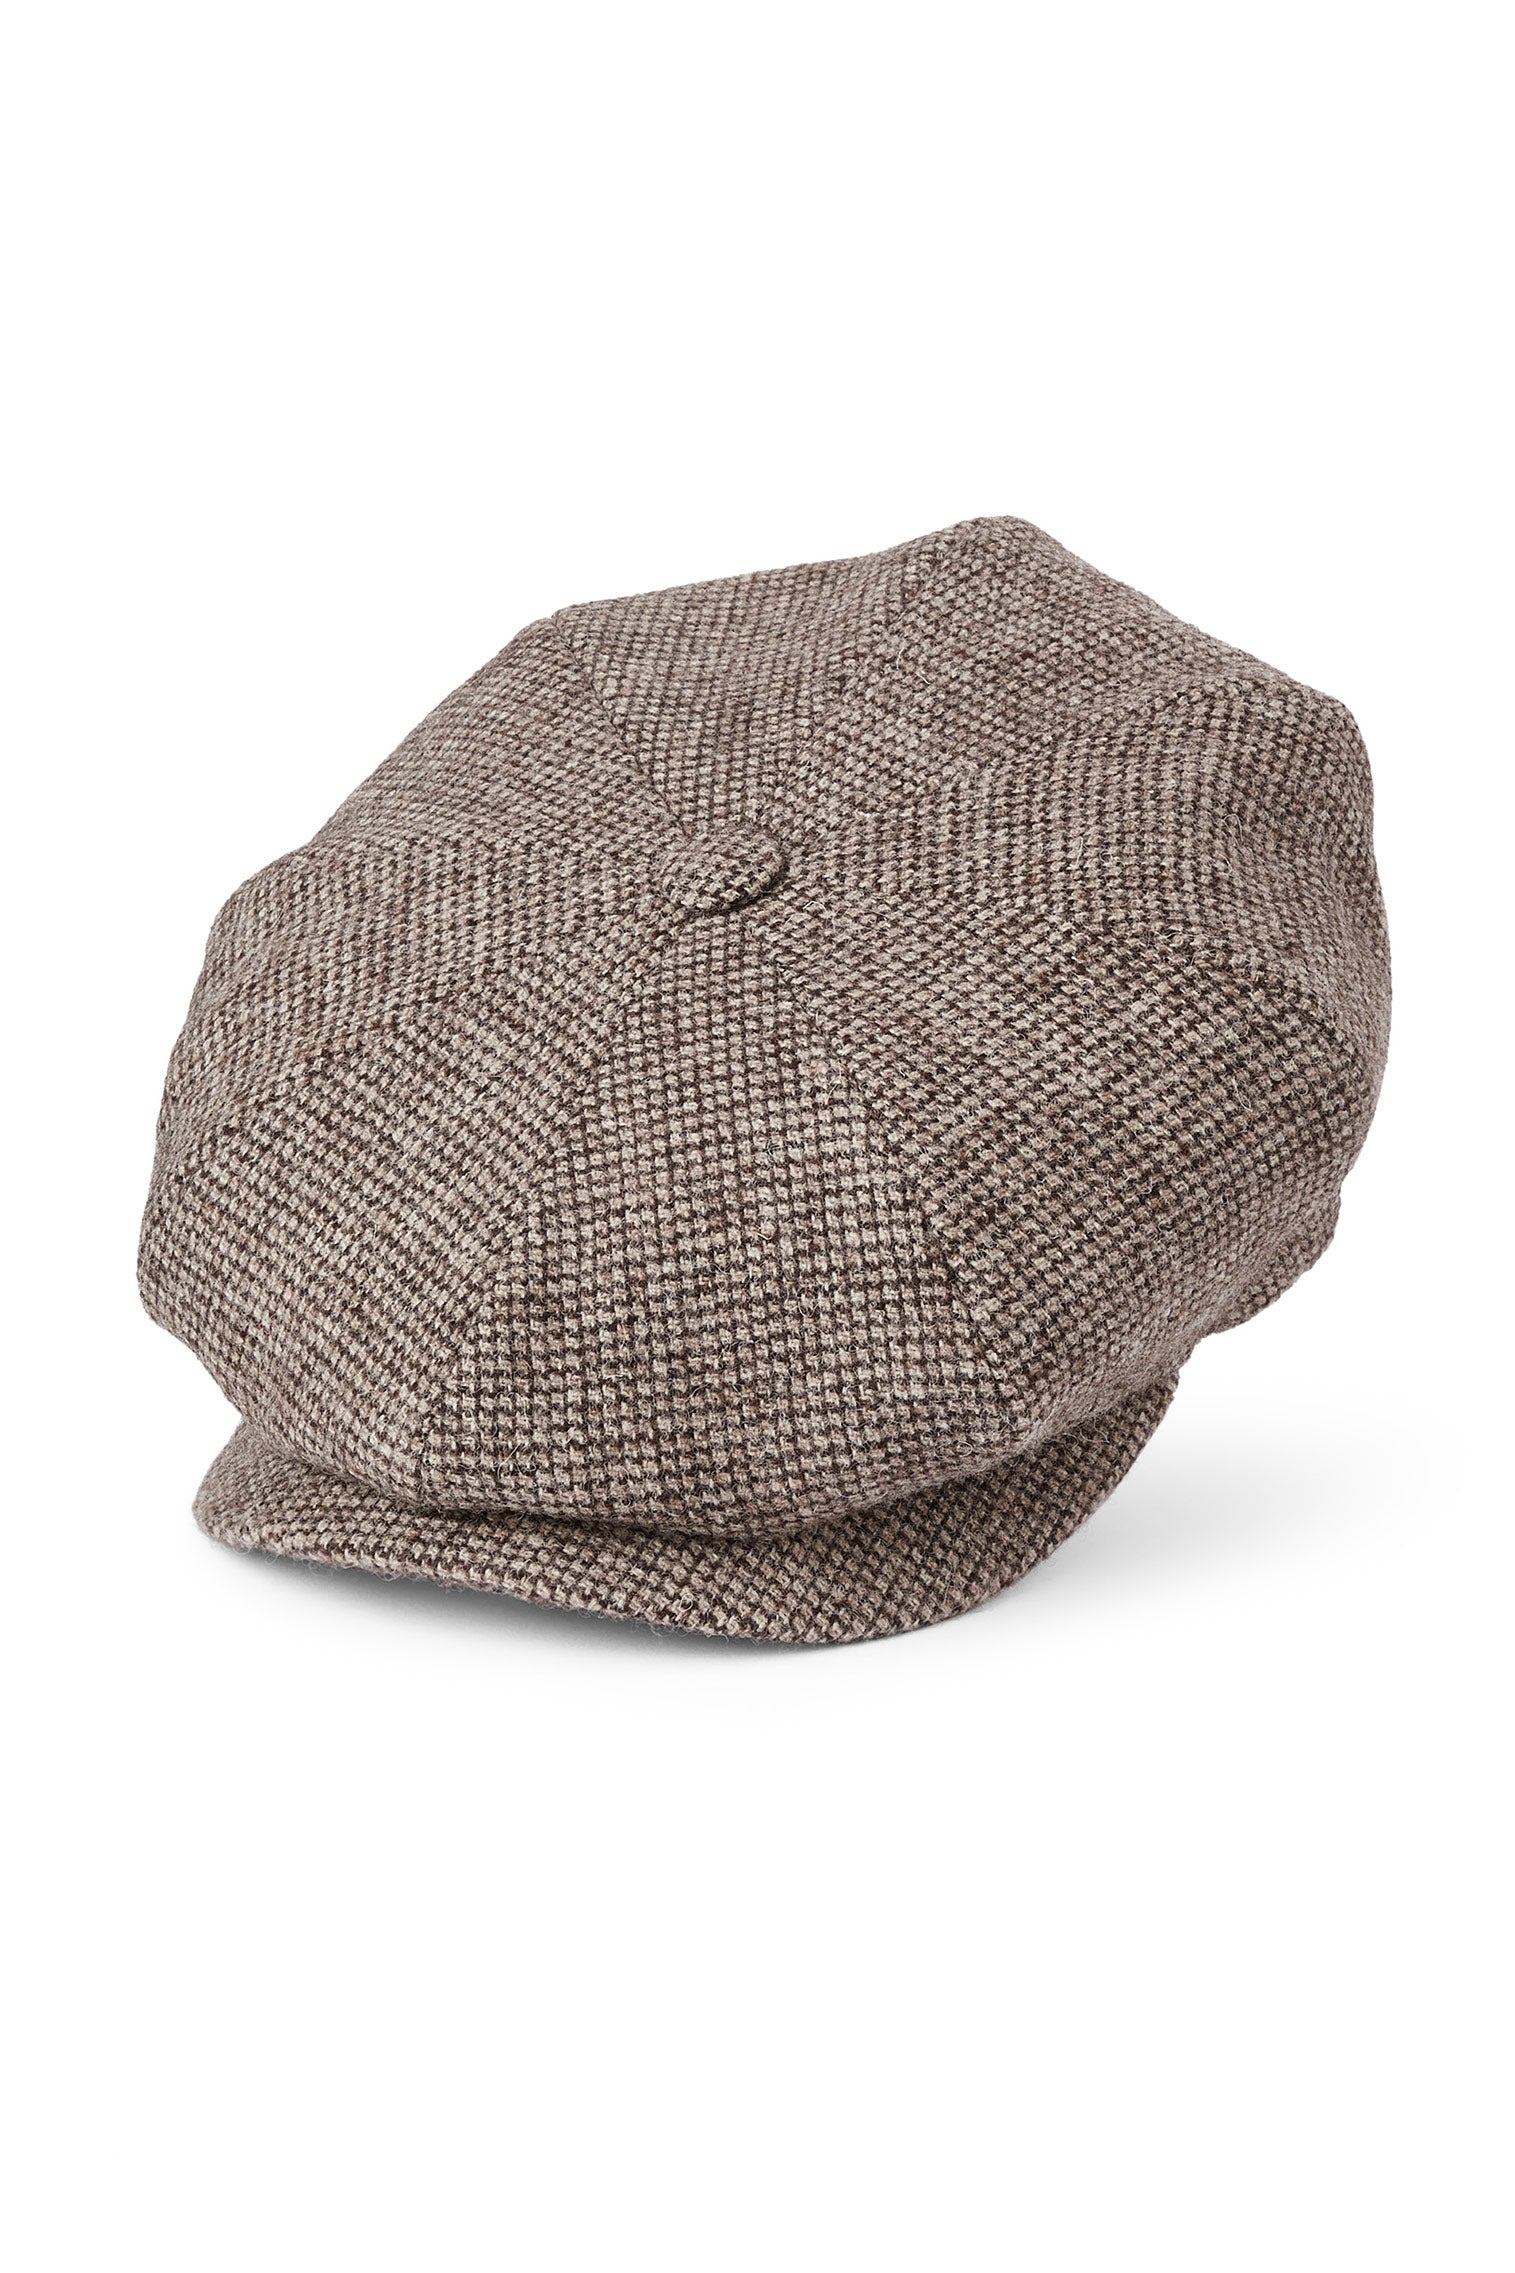 Muirfield Birdseye Bakerboy Cap - Hats for Round Face Shapes - Lock & Co. Hatters London UK